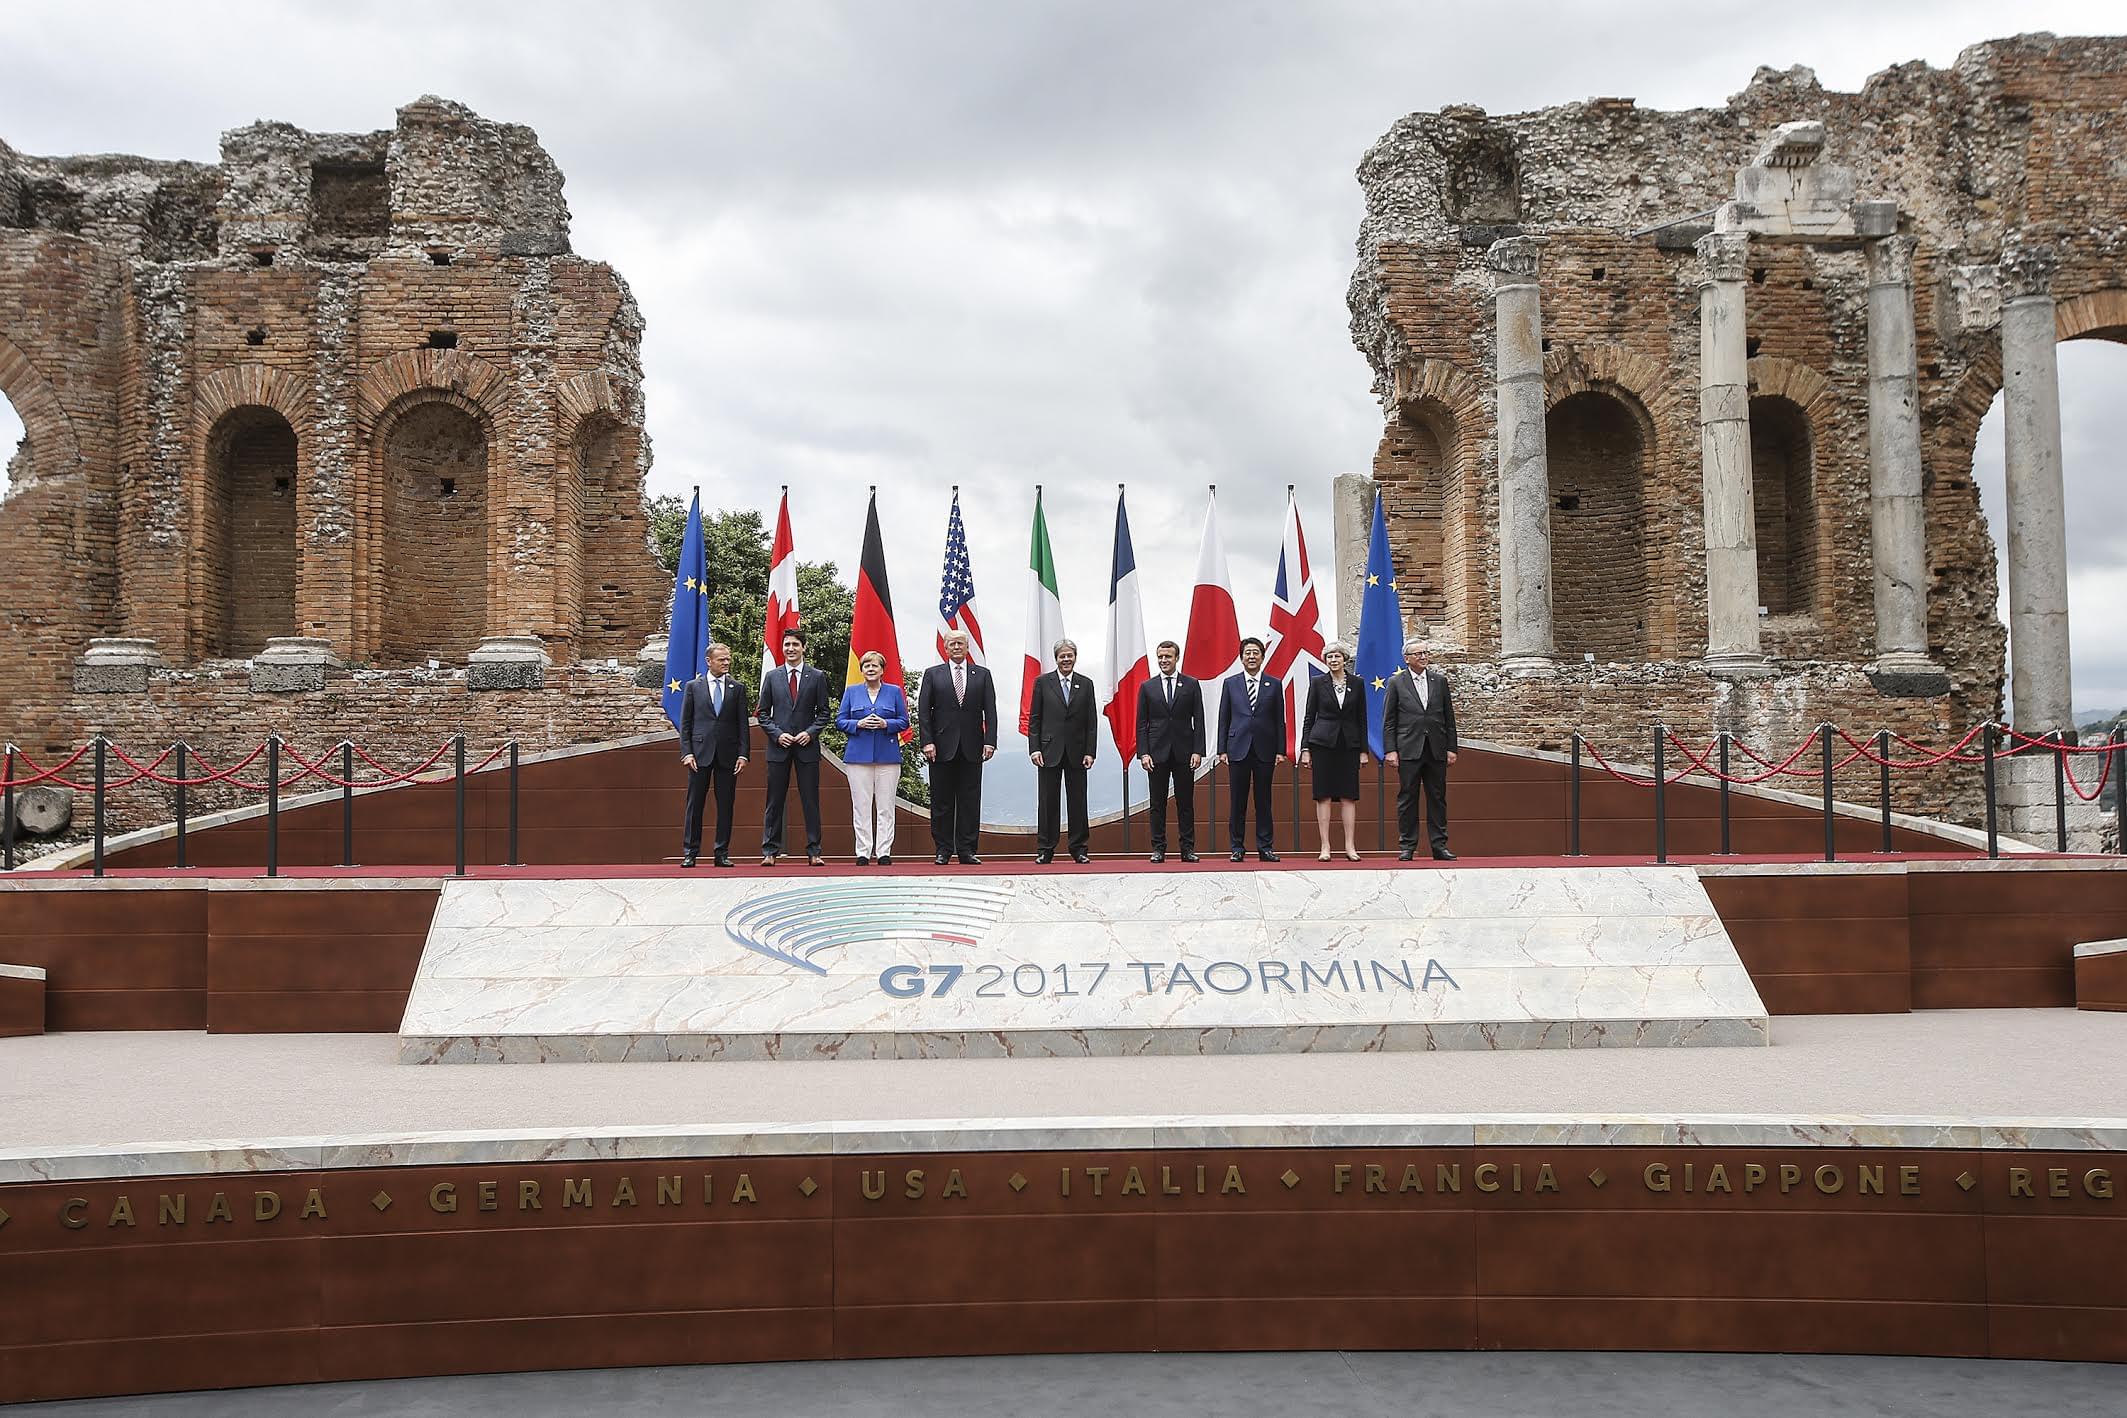 G7 Summit Taormina 2017